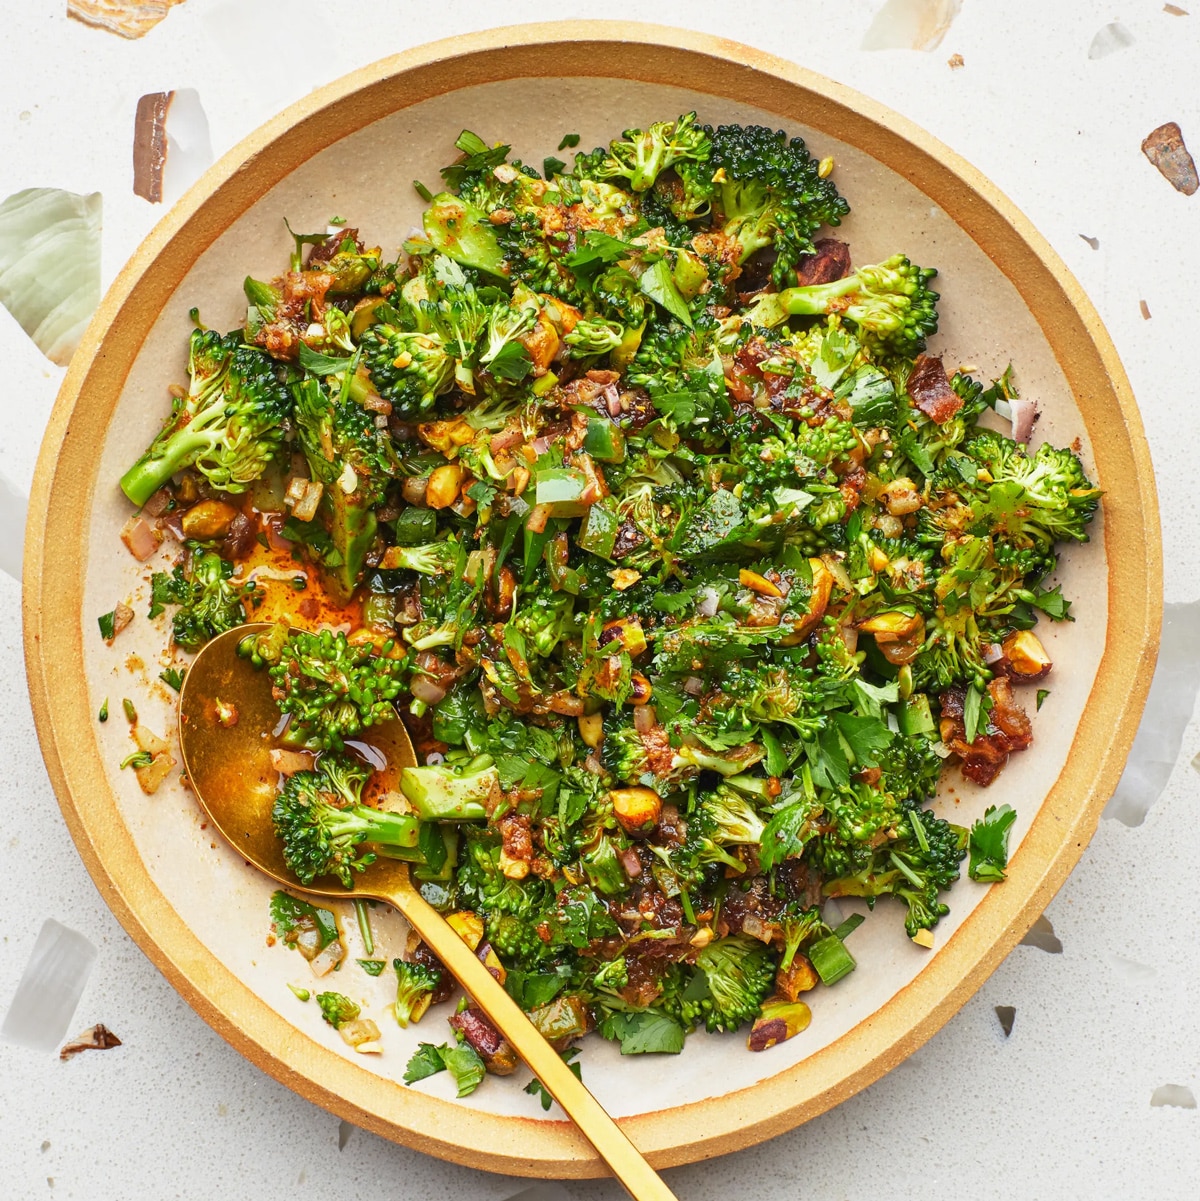 Broccoli spoon salad with warm vinaigrette